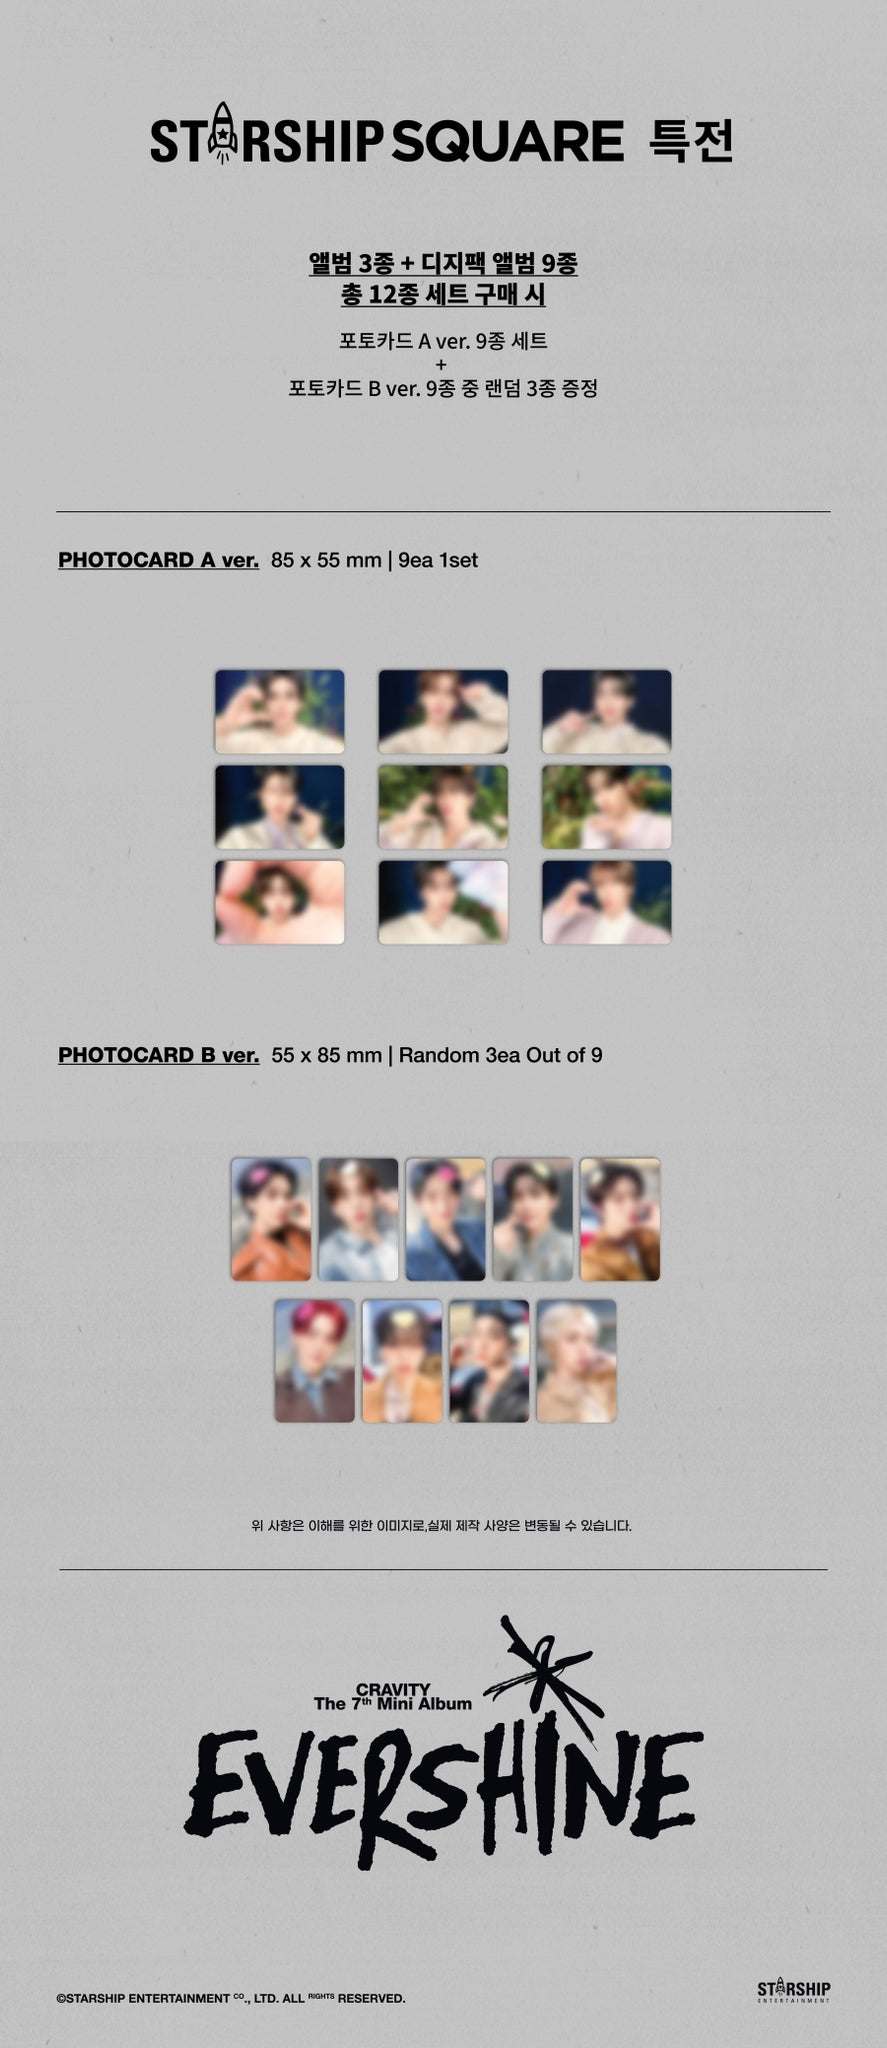 CRAVITY 7th Mini Album EVERSHINE SET Starship Square Pre-order Inclusions Photocard A Set Photocard B